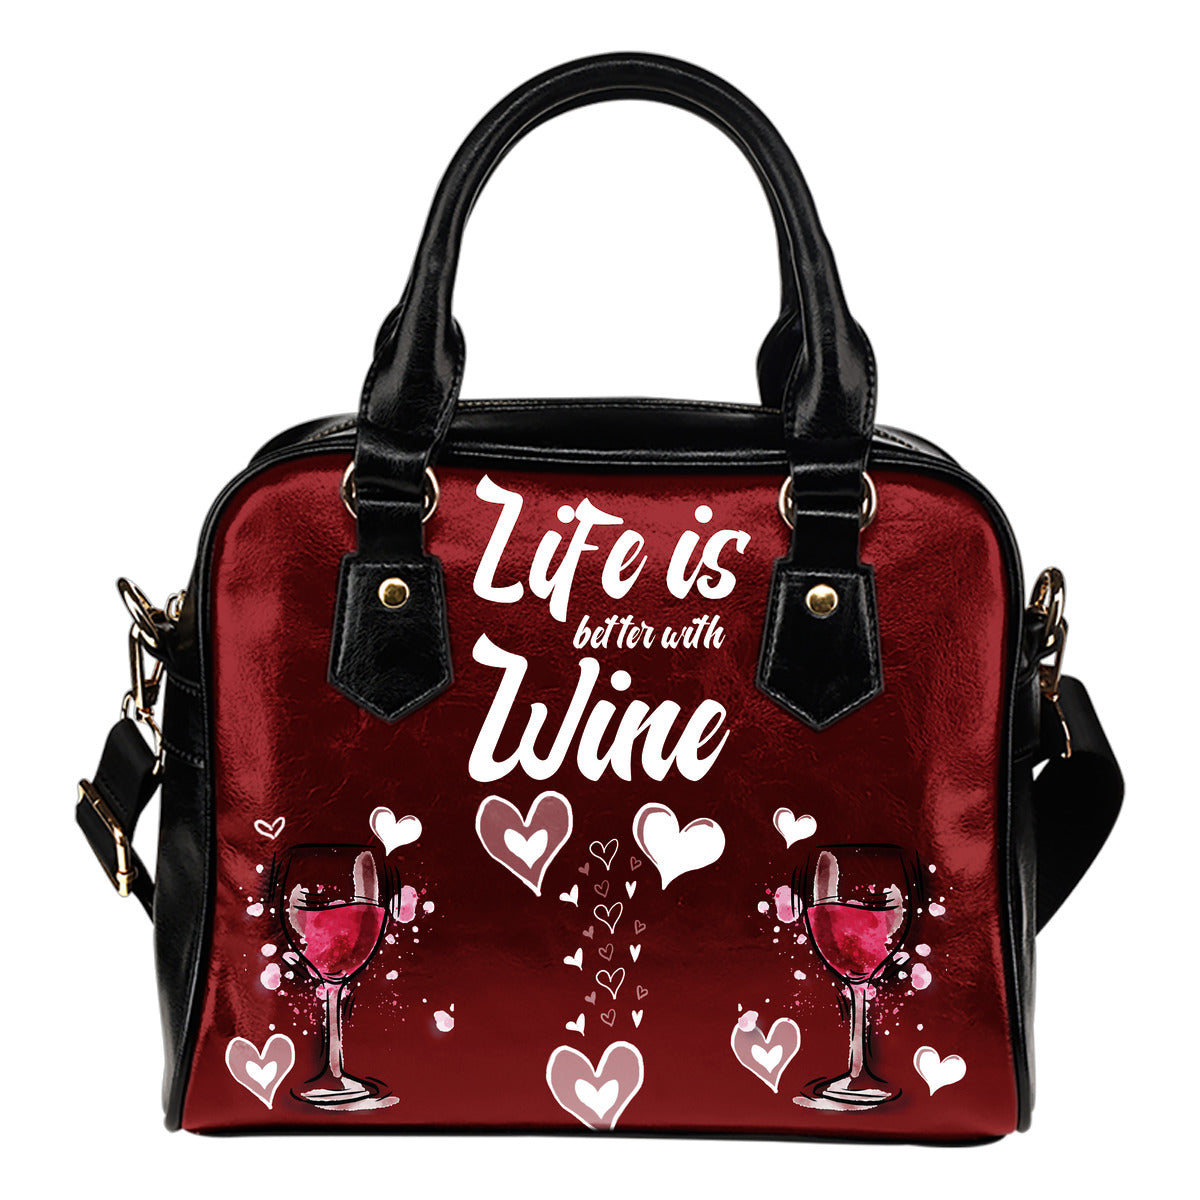 Life is better with Wine Shoulder Bag